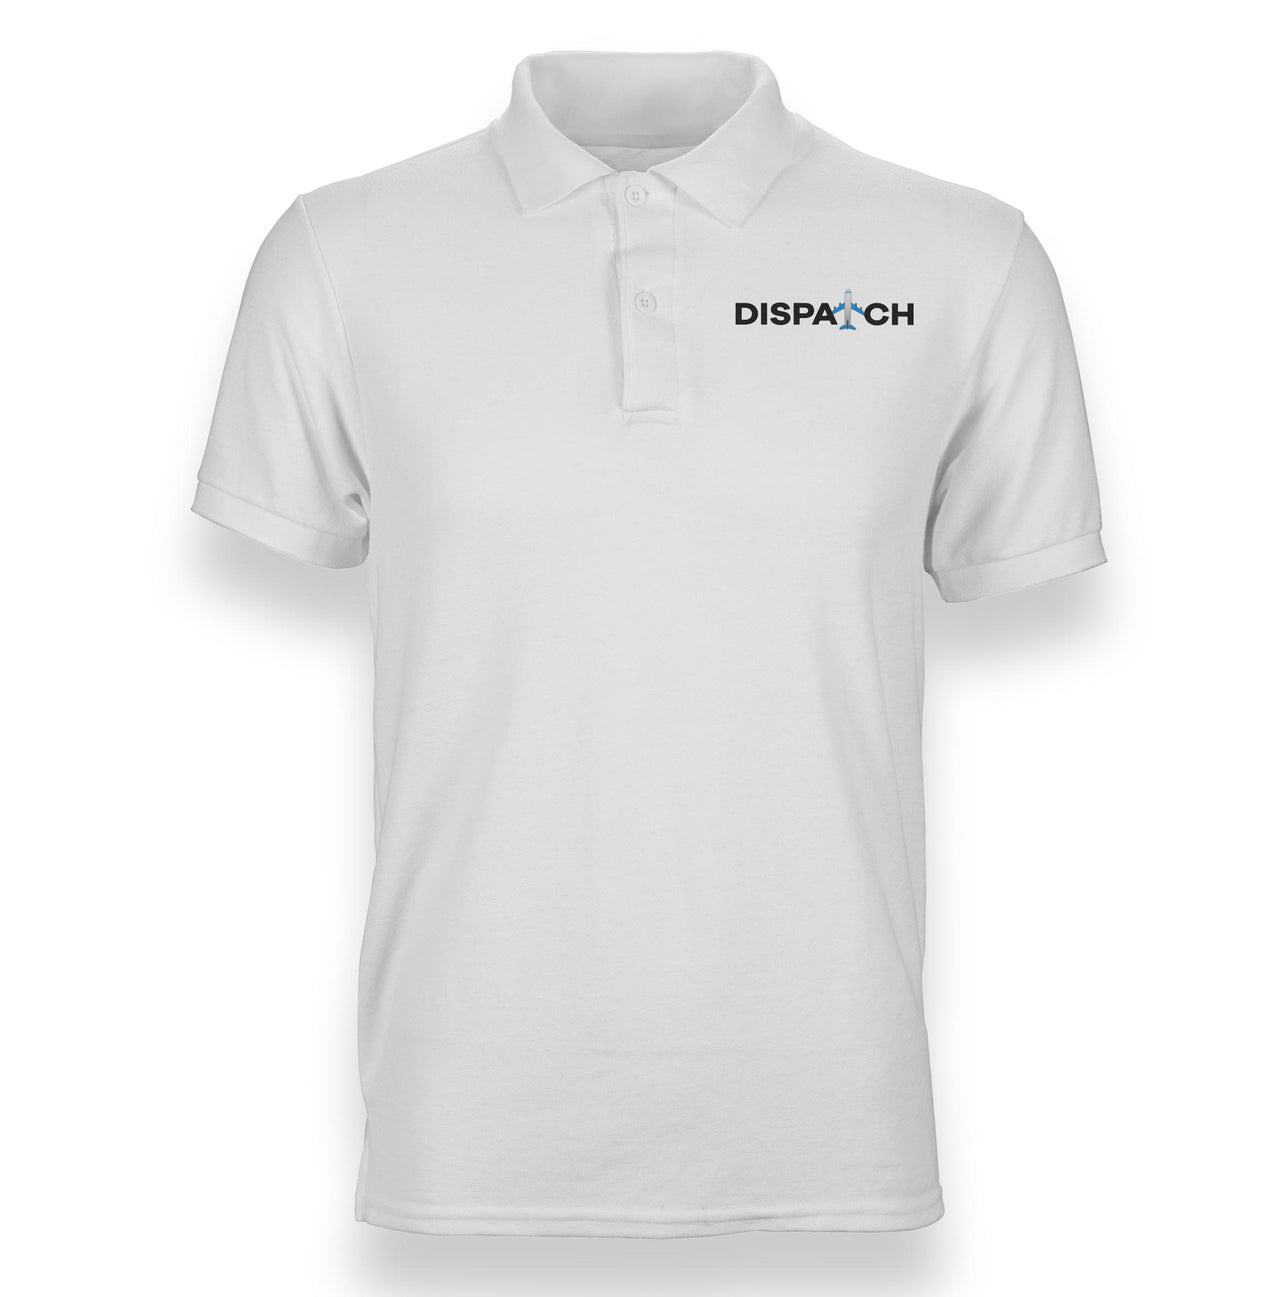 Dispatch Designed Polo T-Shirts